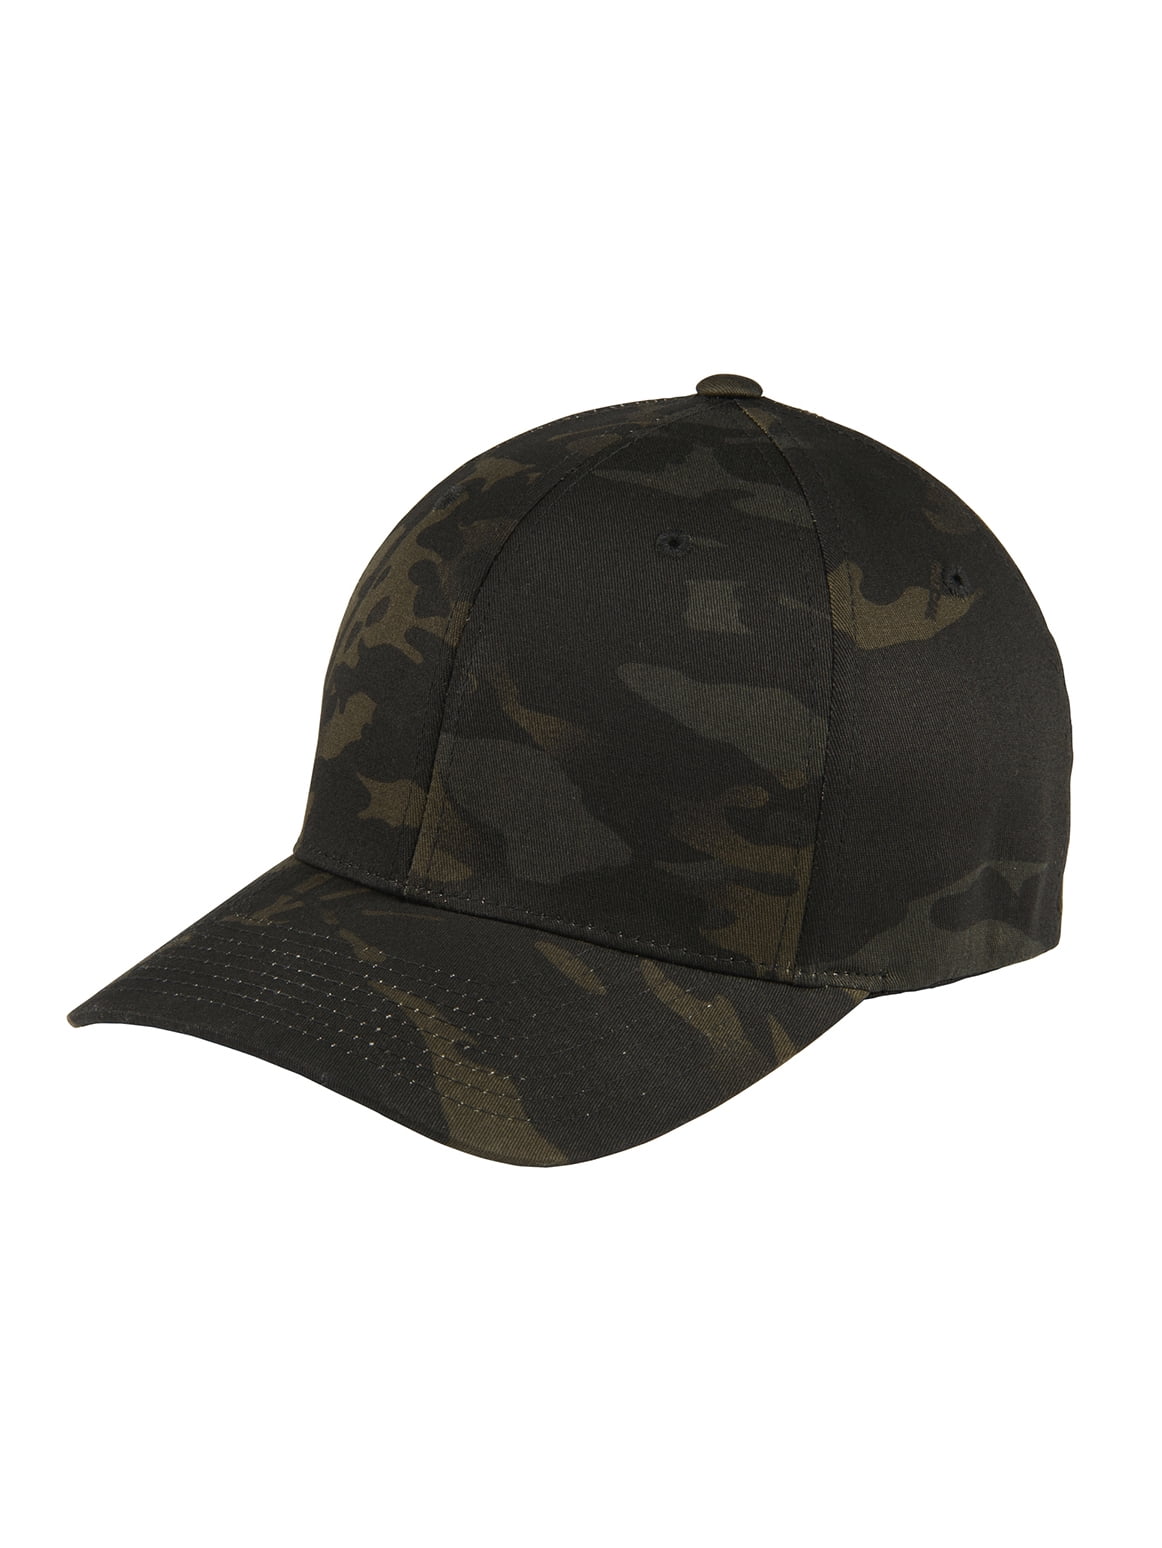 Large/X-Large - Baseball Fit Olive Headwear Flex - Top Cap Drab/Green